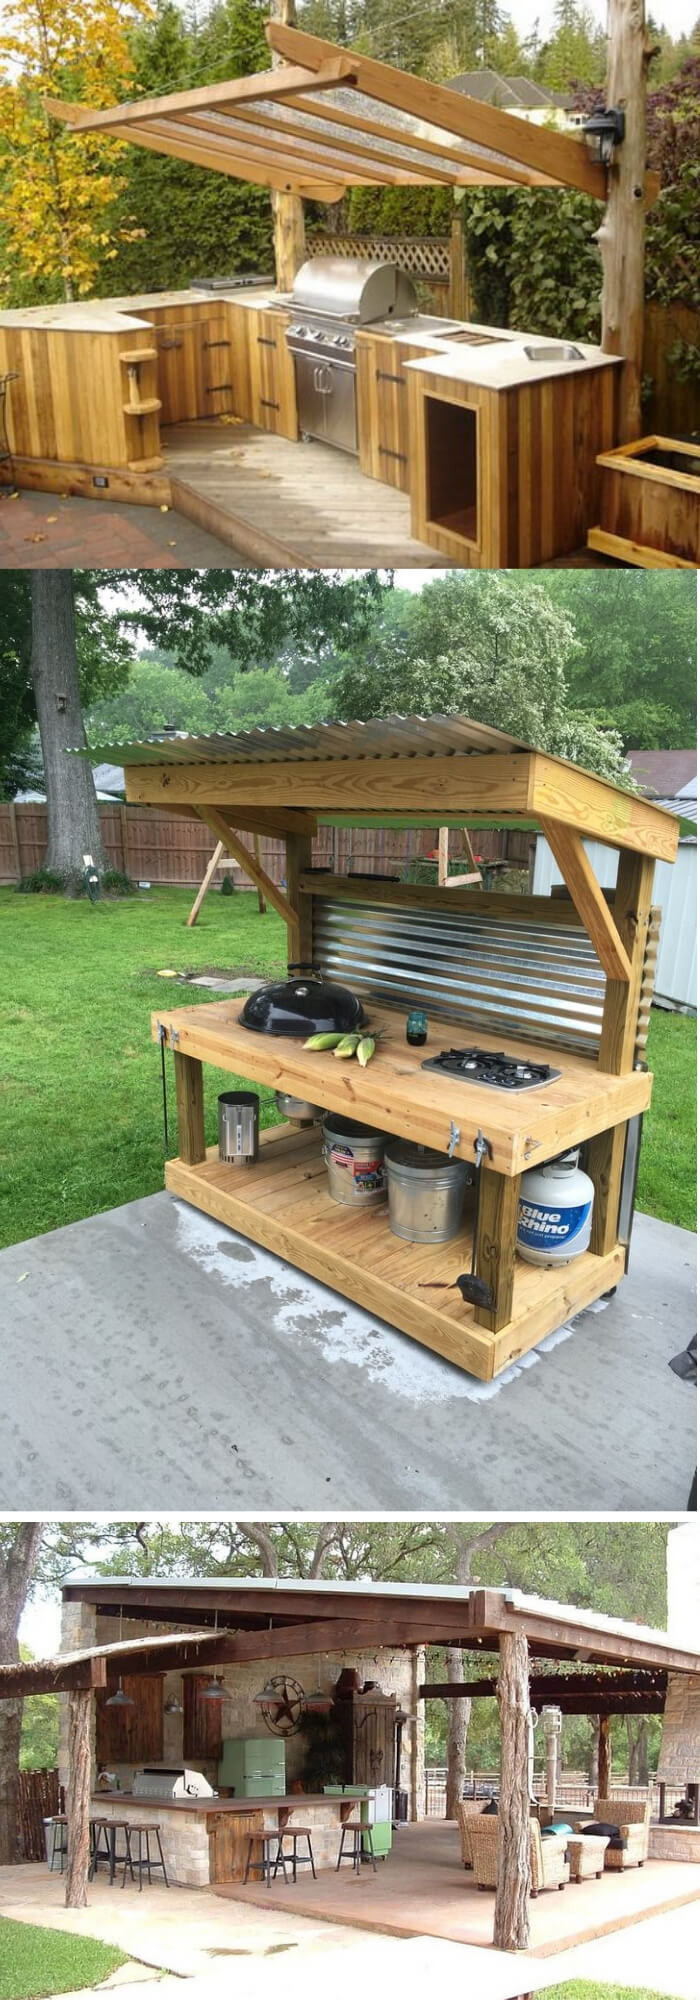 DIY Outdoor Kitchen Cabinets
 31 Stunning Outdoor Kitchen Ideas & Designs With